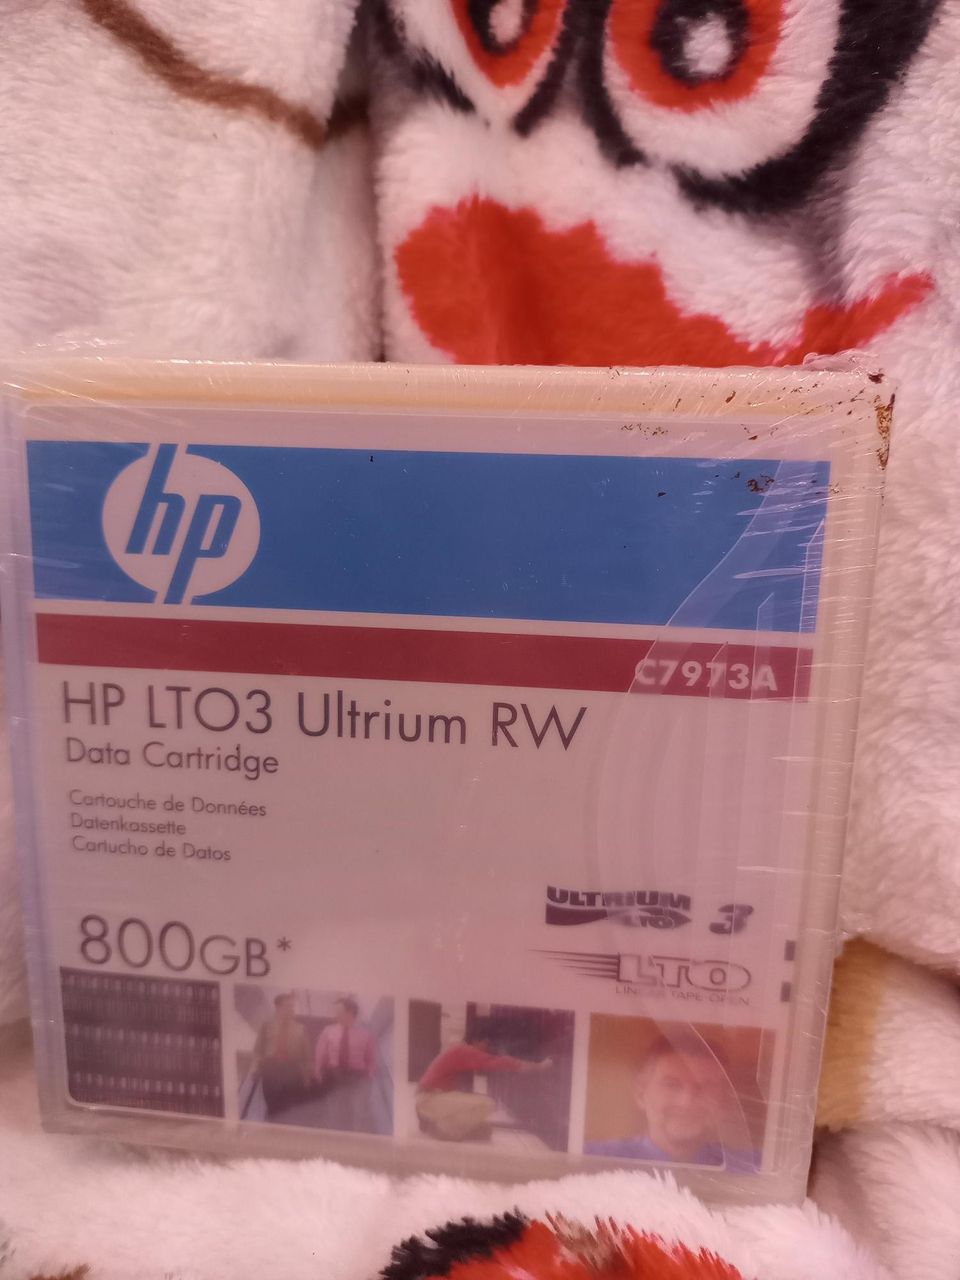 HP LTO3 Ultrium 800 Gt

Tietonauha